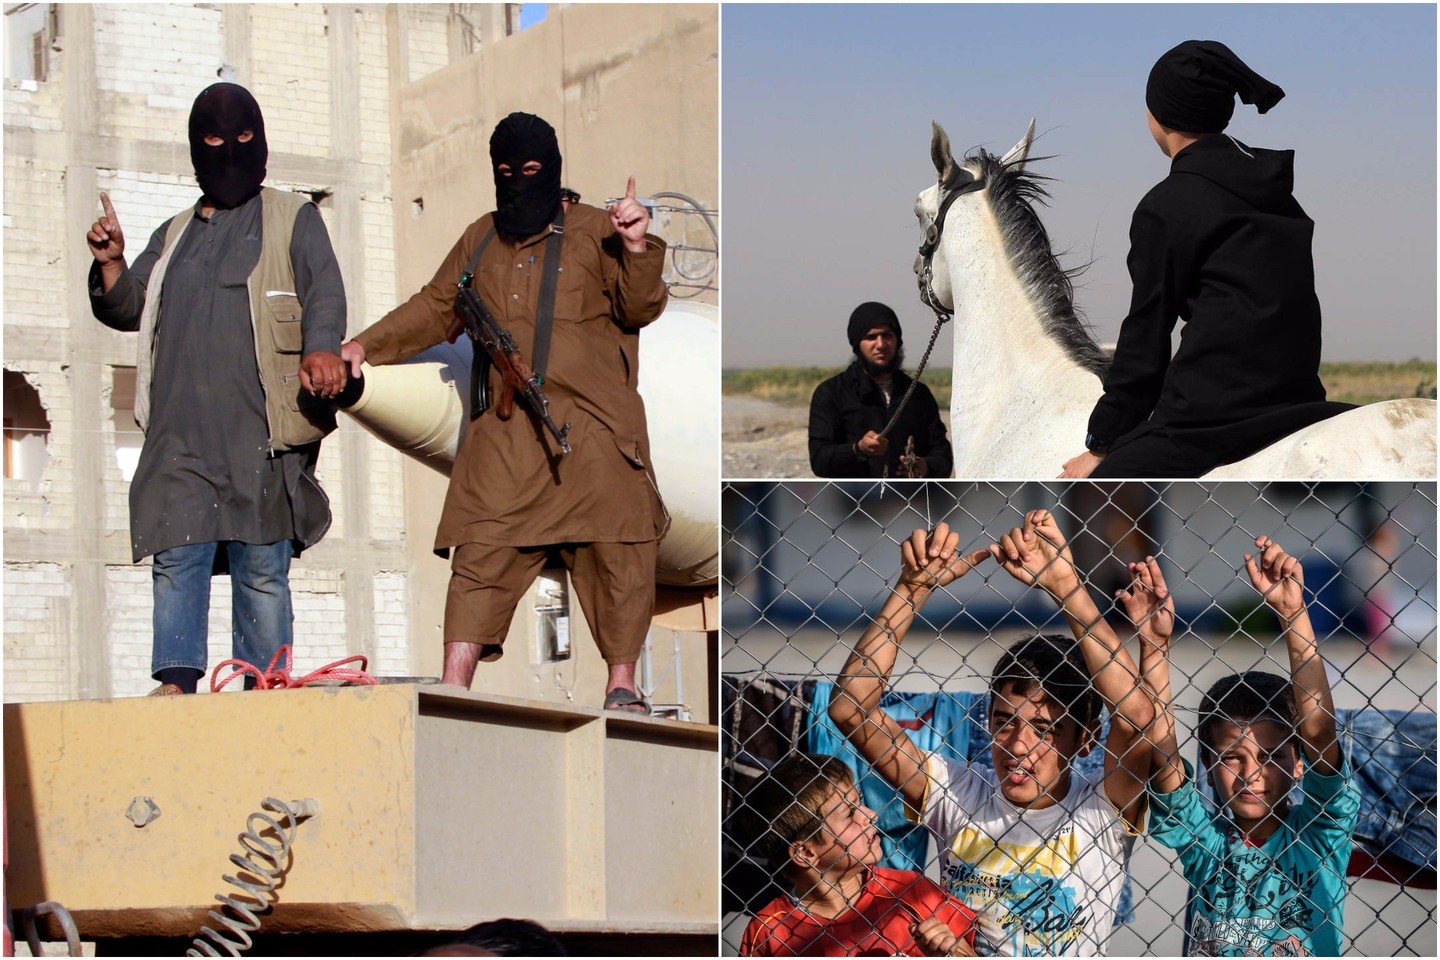  Džihadistų grupuotę IV palikę vaikai slapta bėga į Europą.<br> lrytas.lt montažas